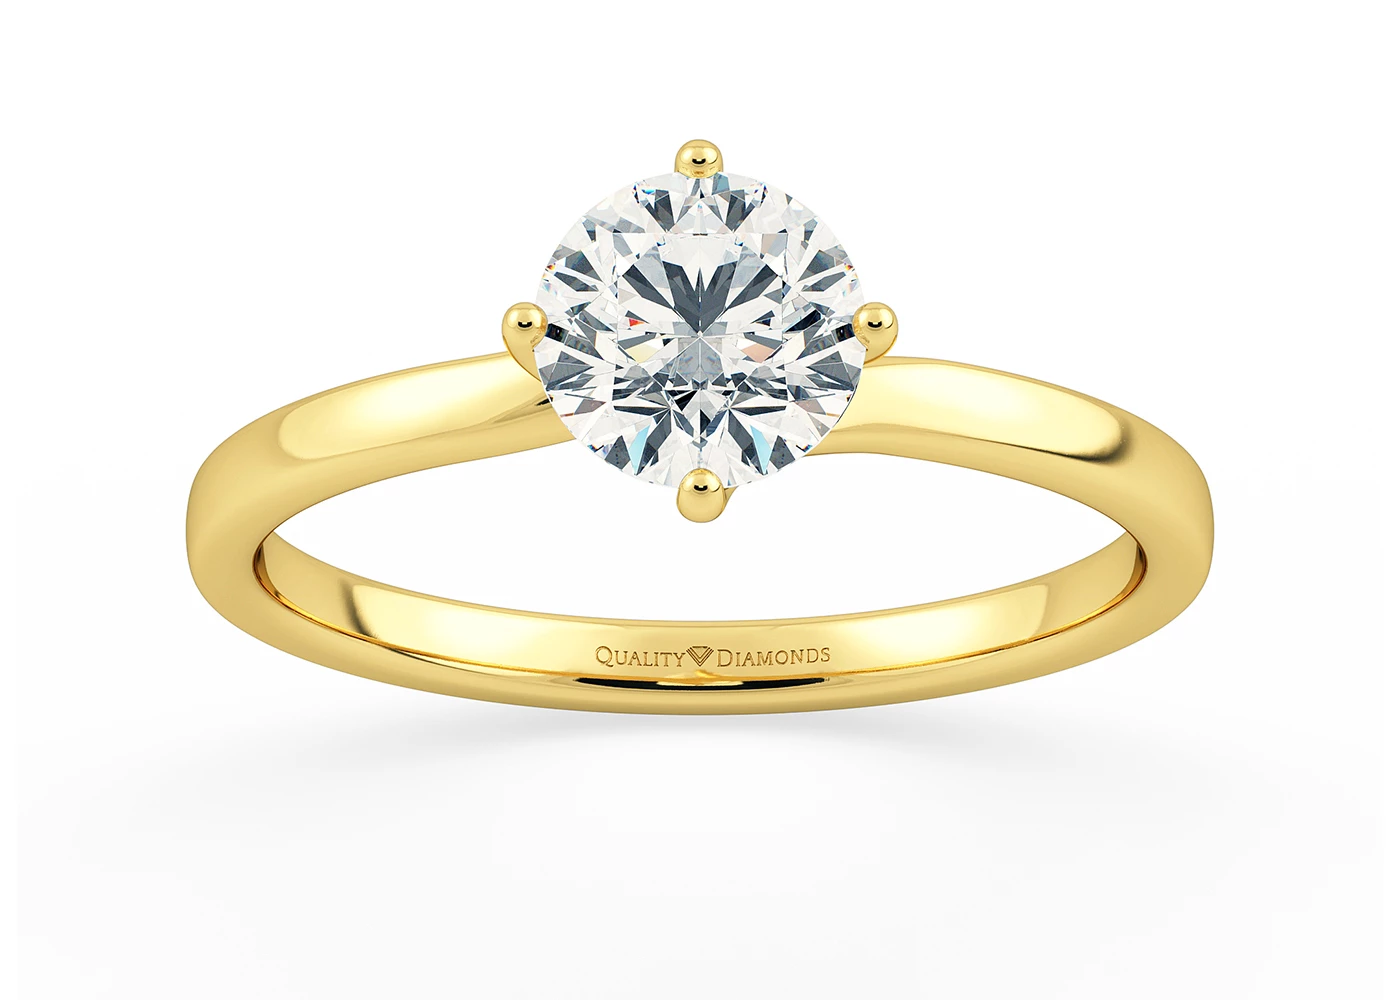 Round Brilliant Abbraccio Diamond Ring in 9K Yellow Gold